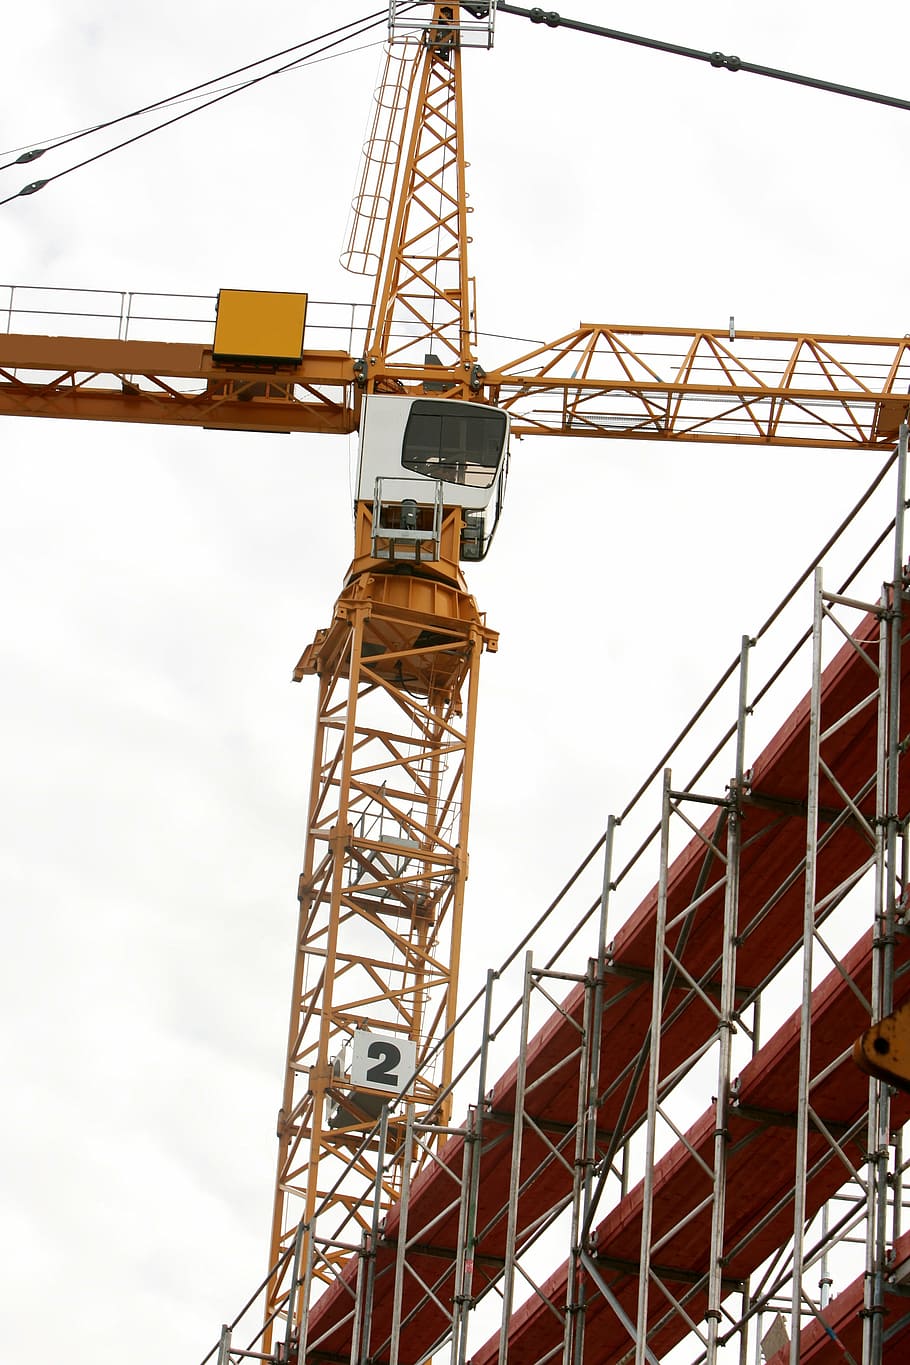 baukran, crane, site, construction work, technology, sky, build, crane boom, boom, load lifter